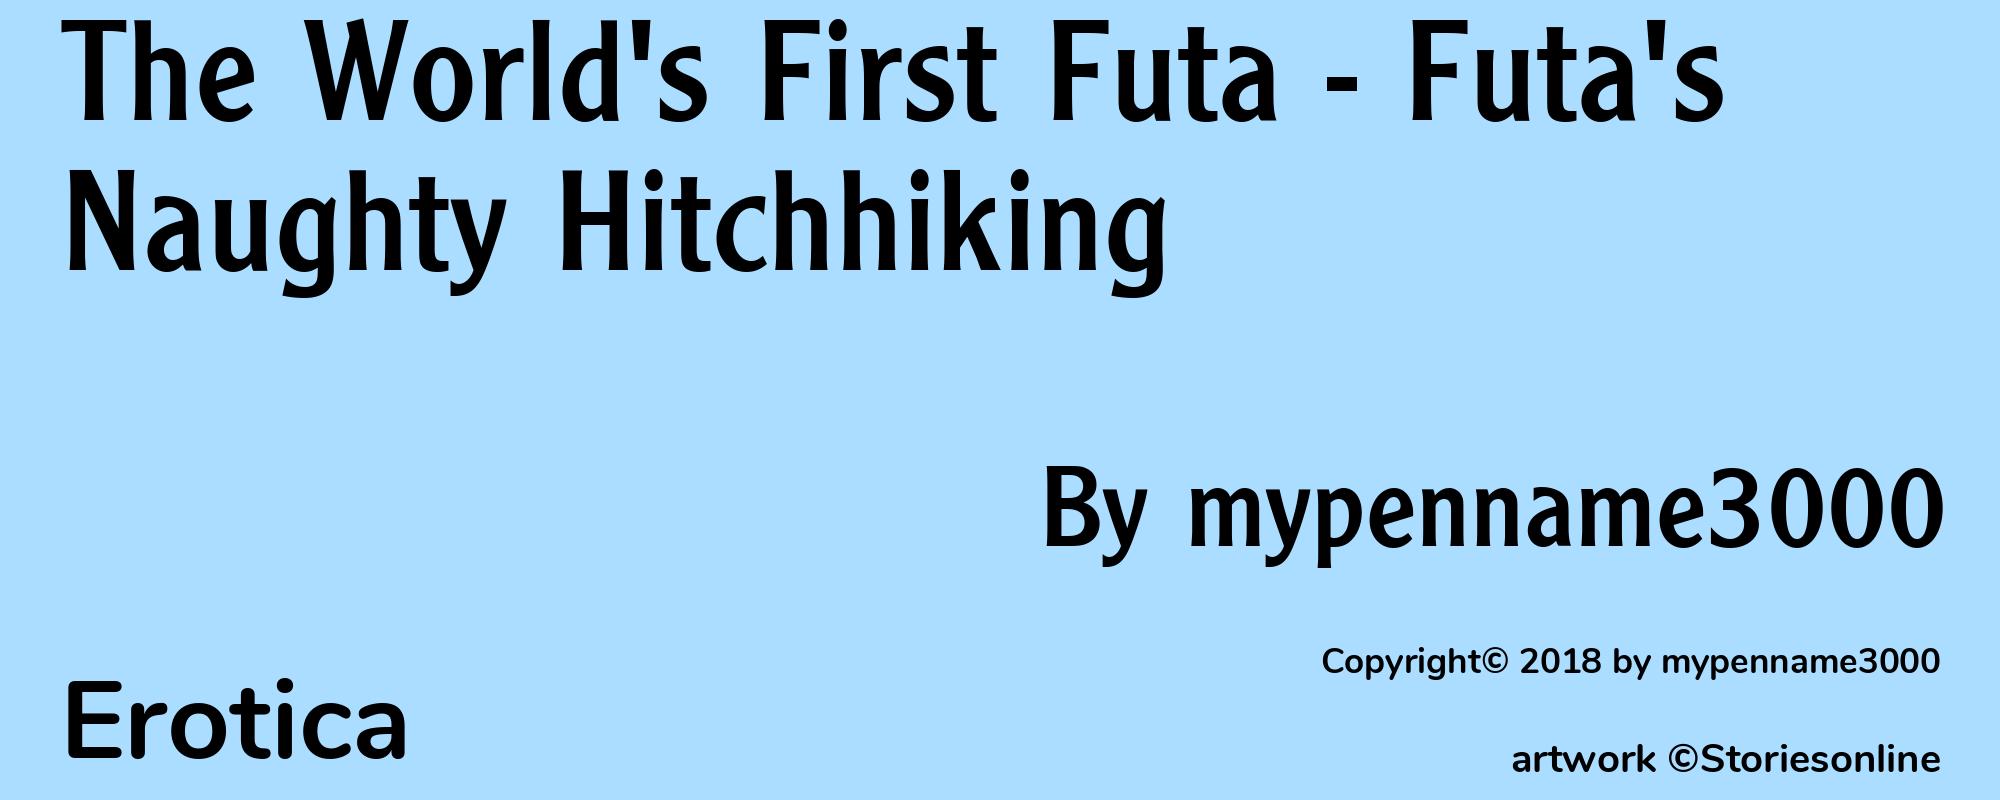 The World's First Futa - Futa's Naughty Hitchhiking - Cover